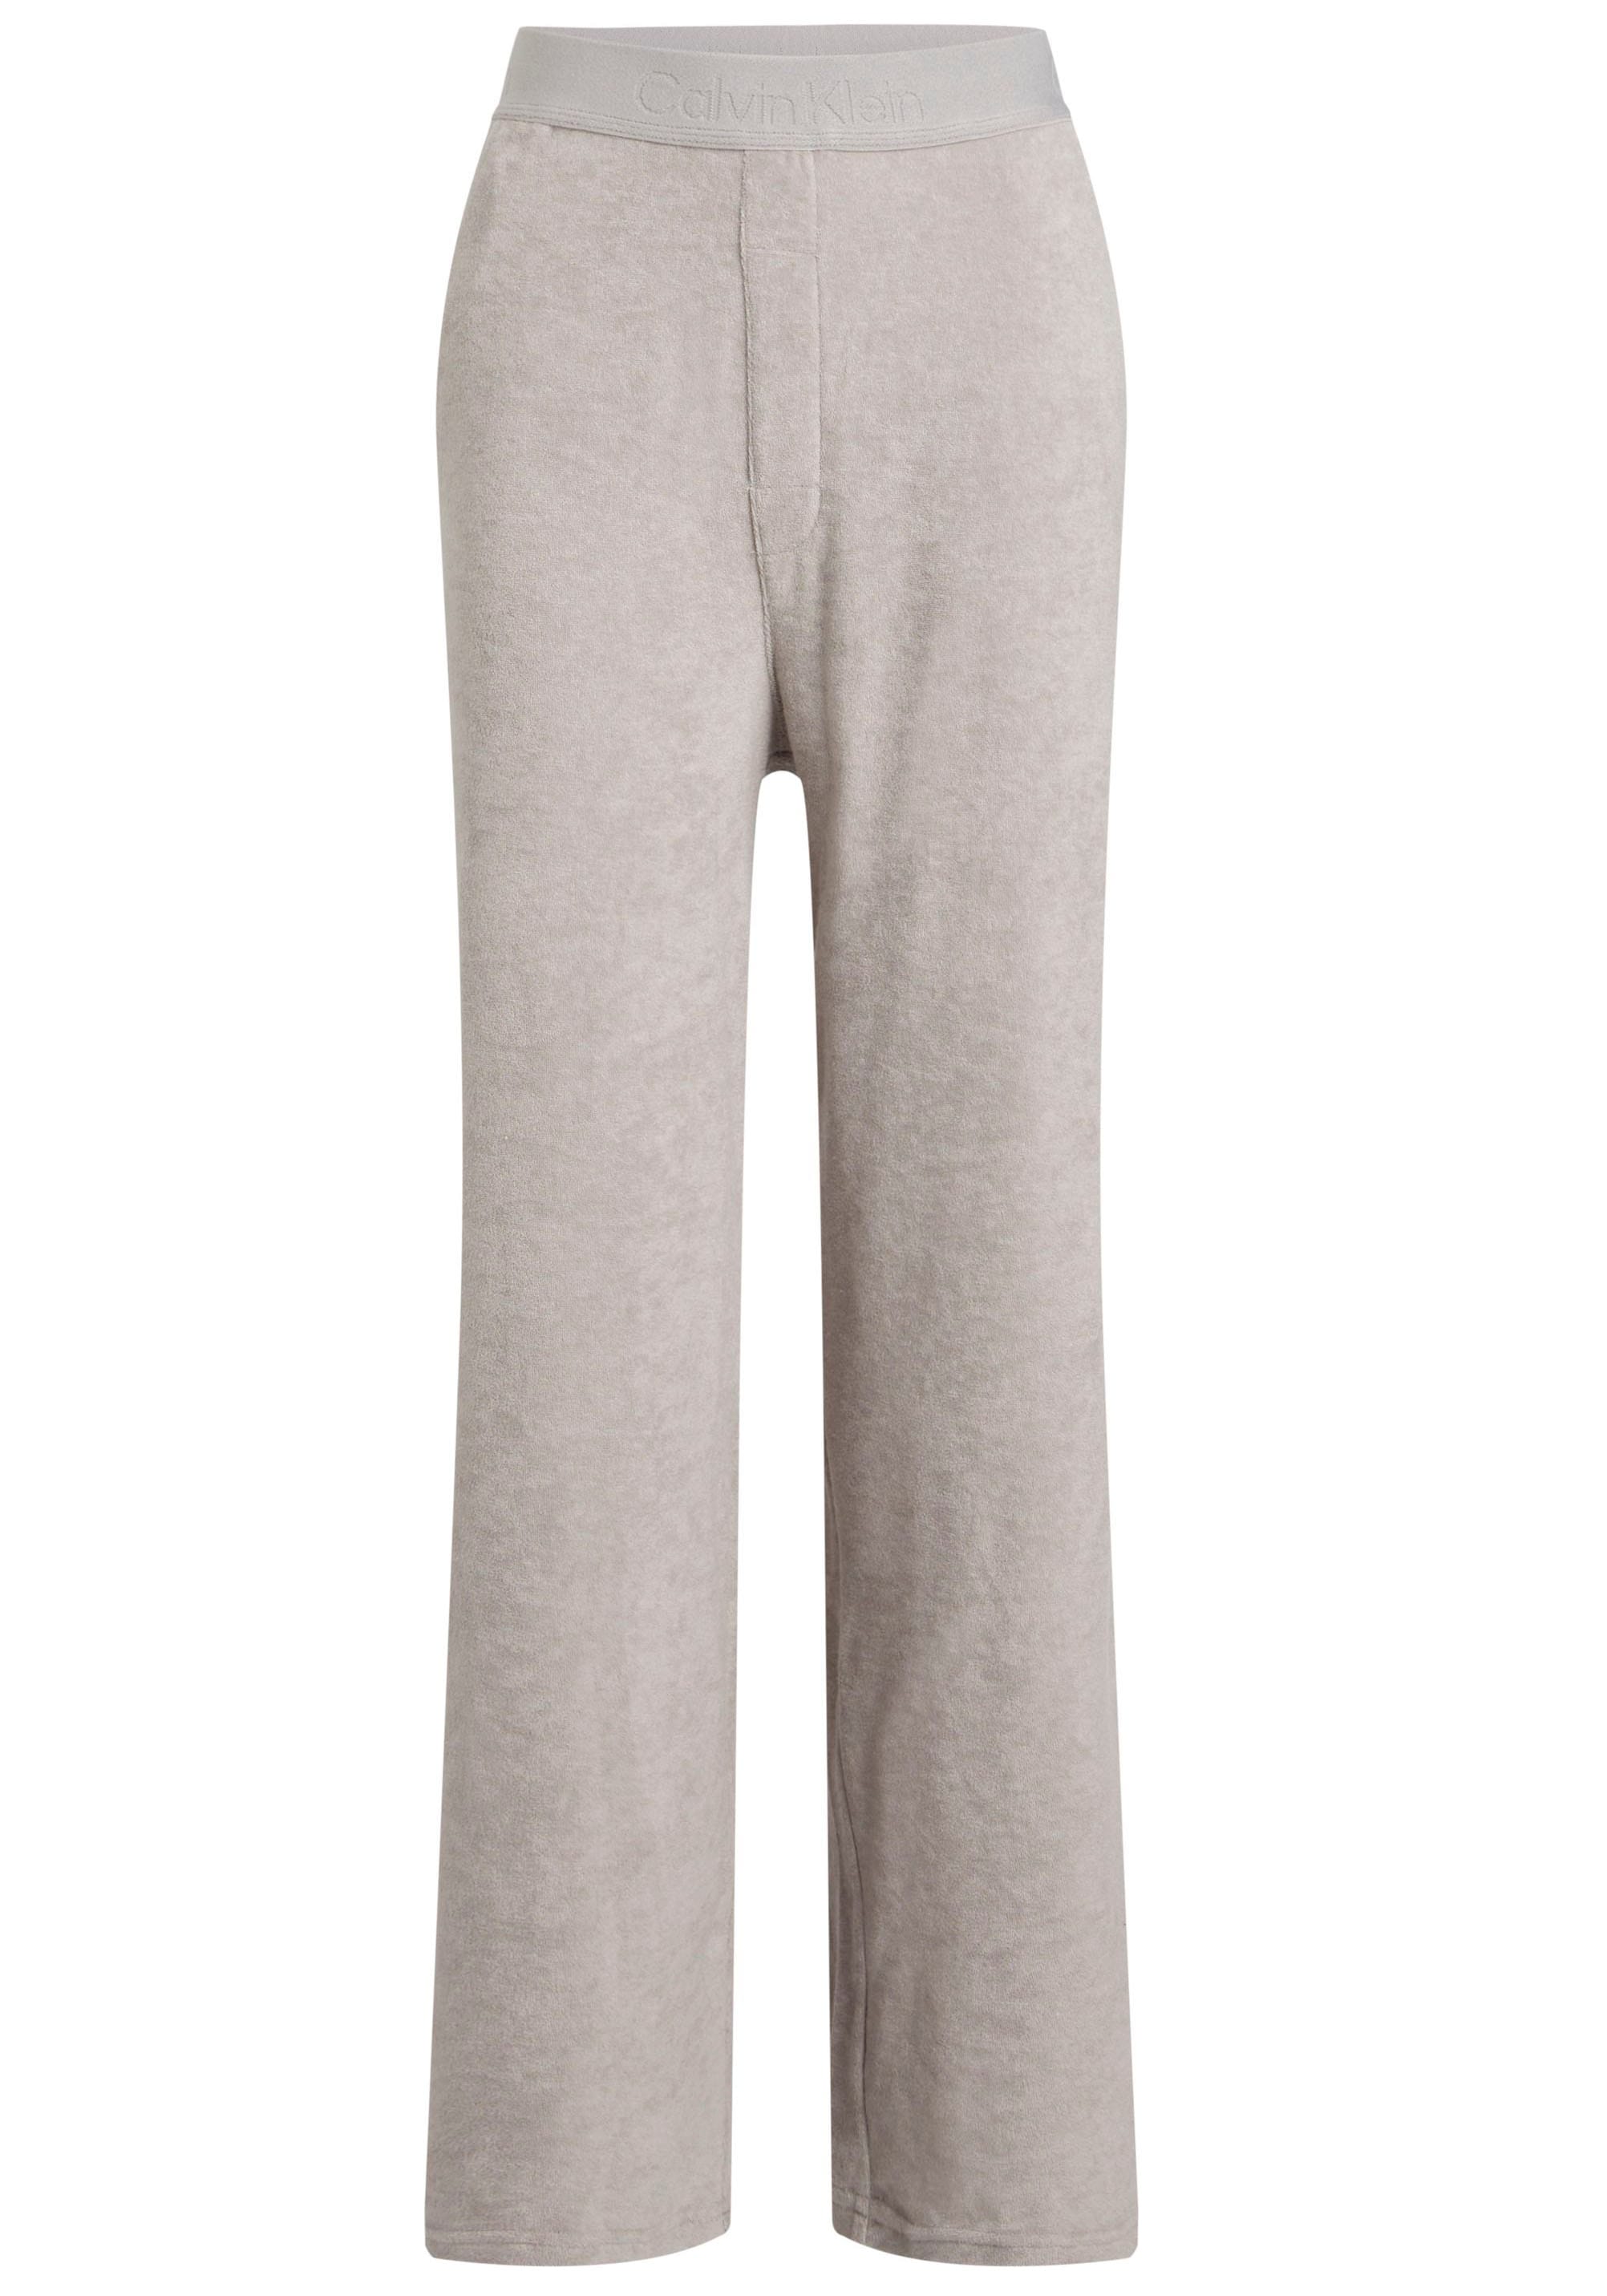 Calvin Klein Pyjamahose »SLEEP PANT«, mit weitem Bein bei OTTOversand